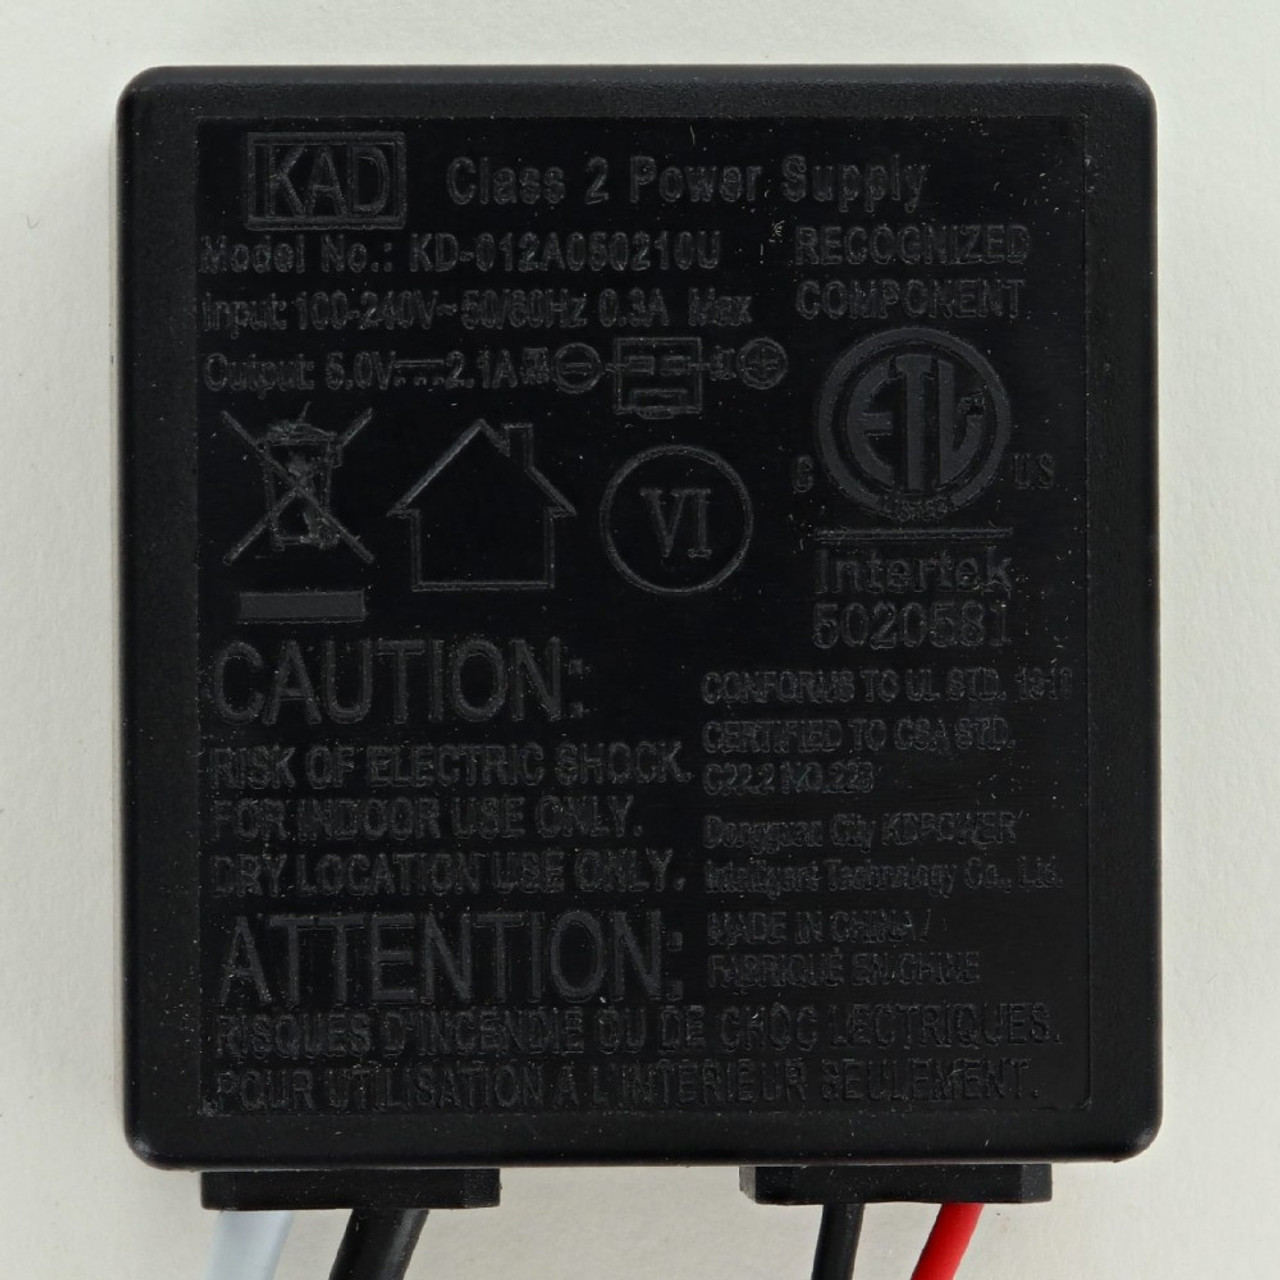 USB-A inline lamp outlet; Input: 100-240Vac 50/60Hz 0.32A; Output 5Vdc 2.1a  Max; CRUS E505525